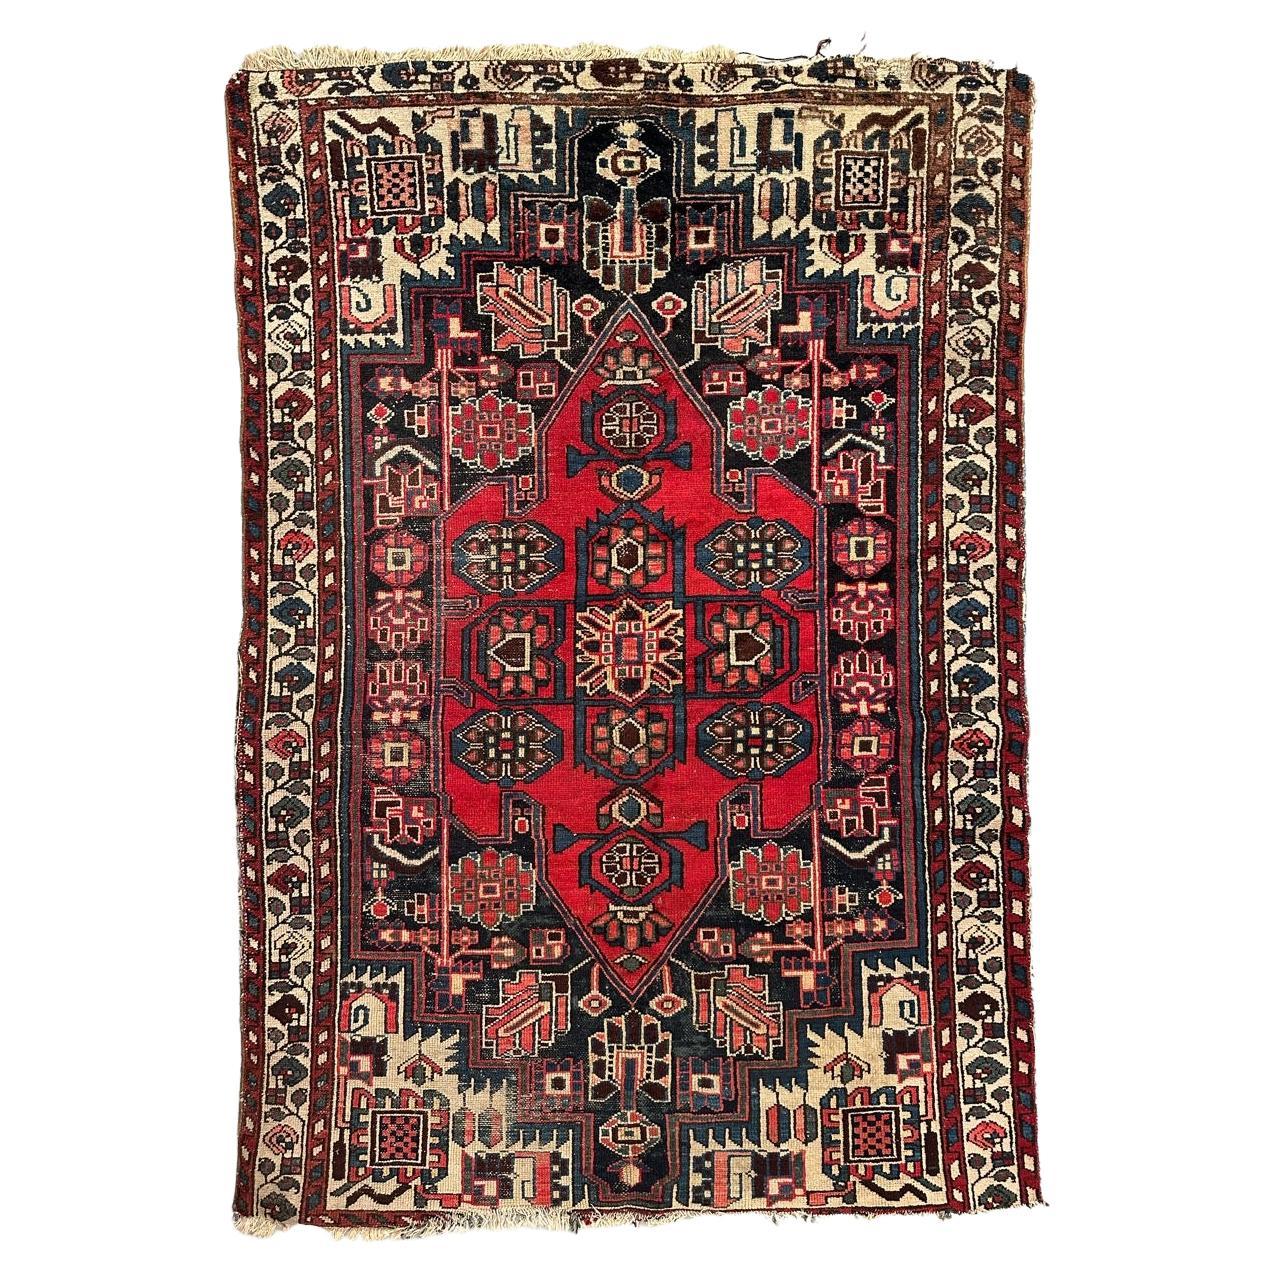 Bobyrug’s Nice vintage distressed Hamadan rug